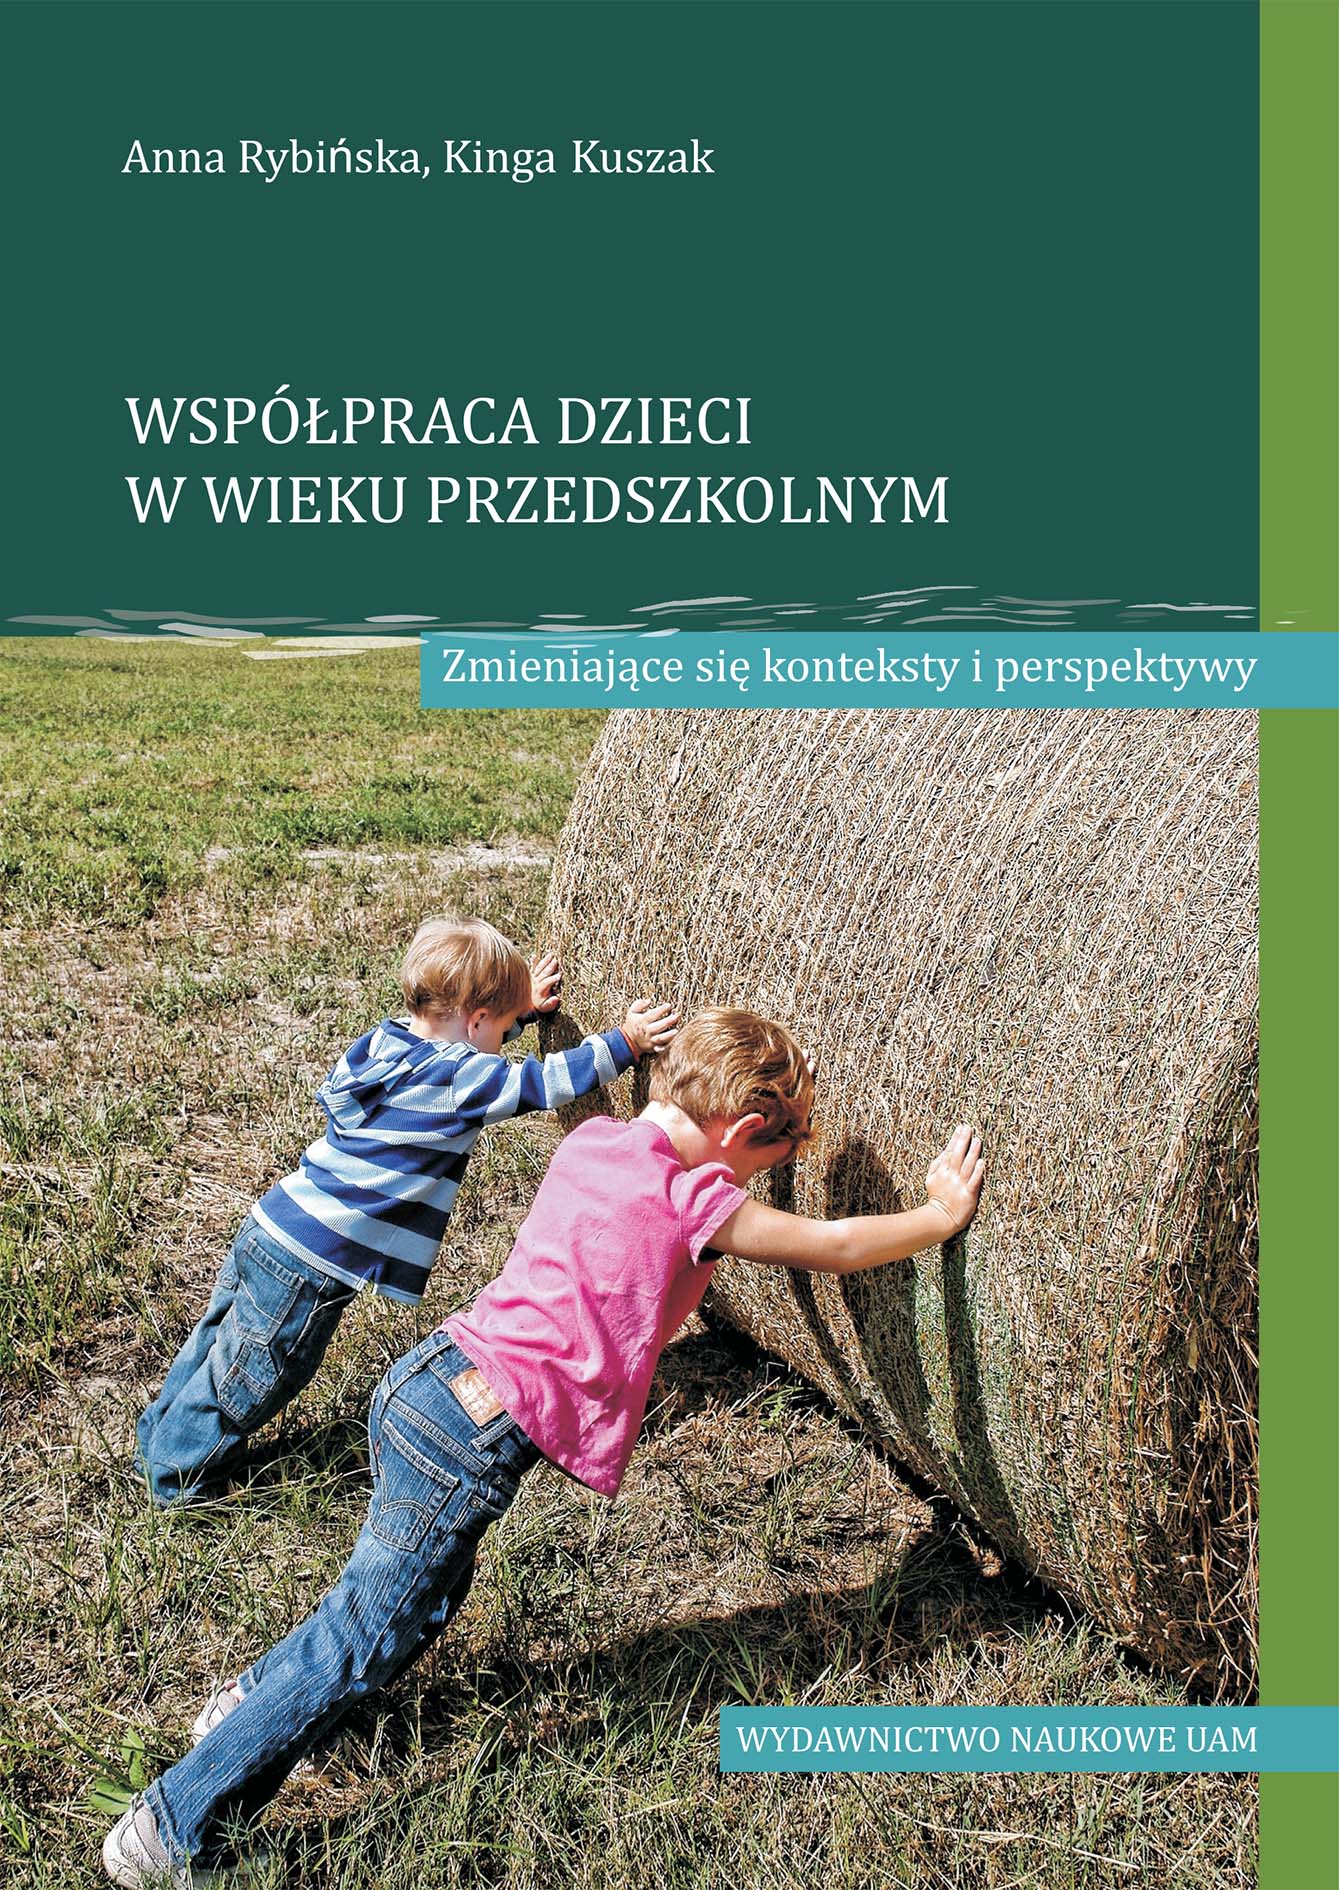 Cooperation of preschool children Cover Image